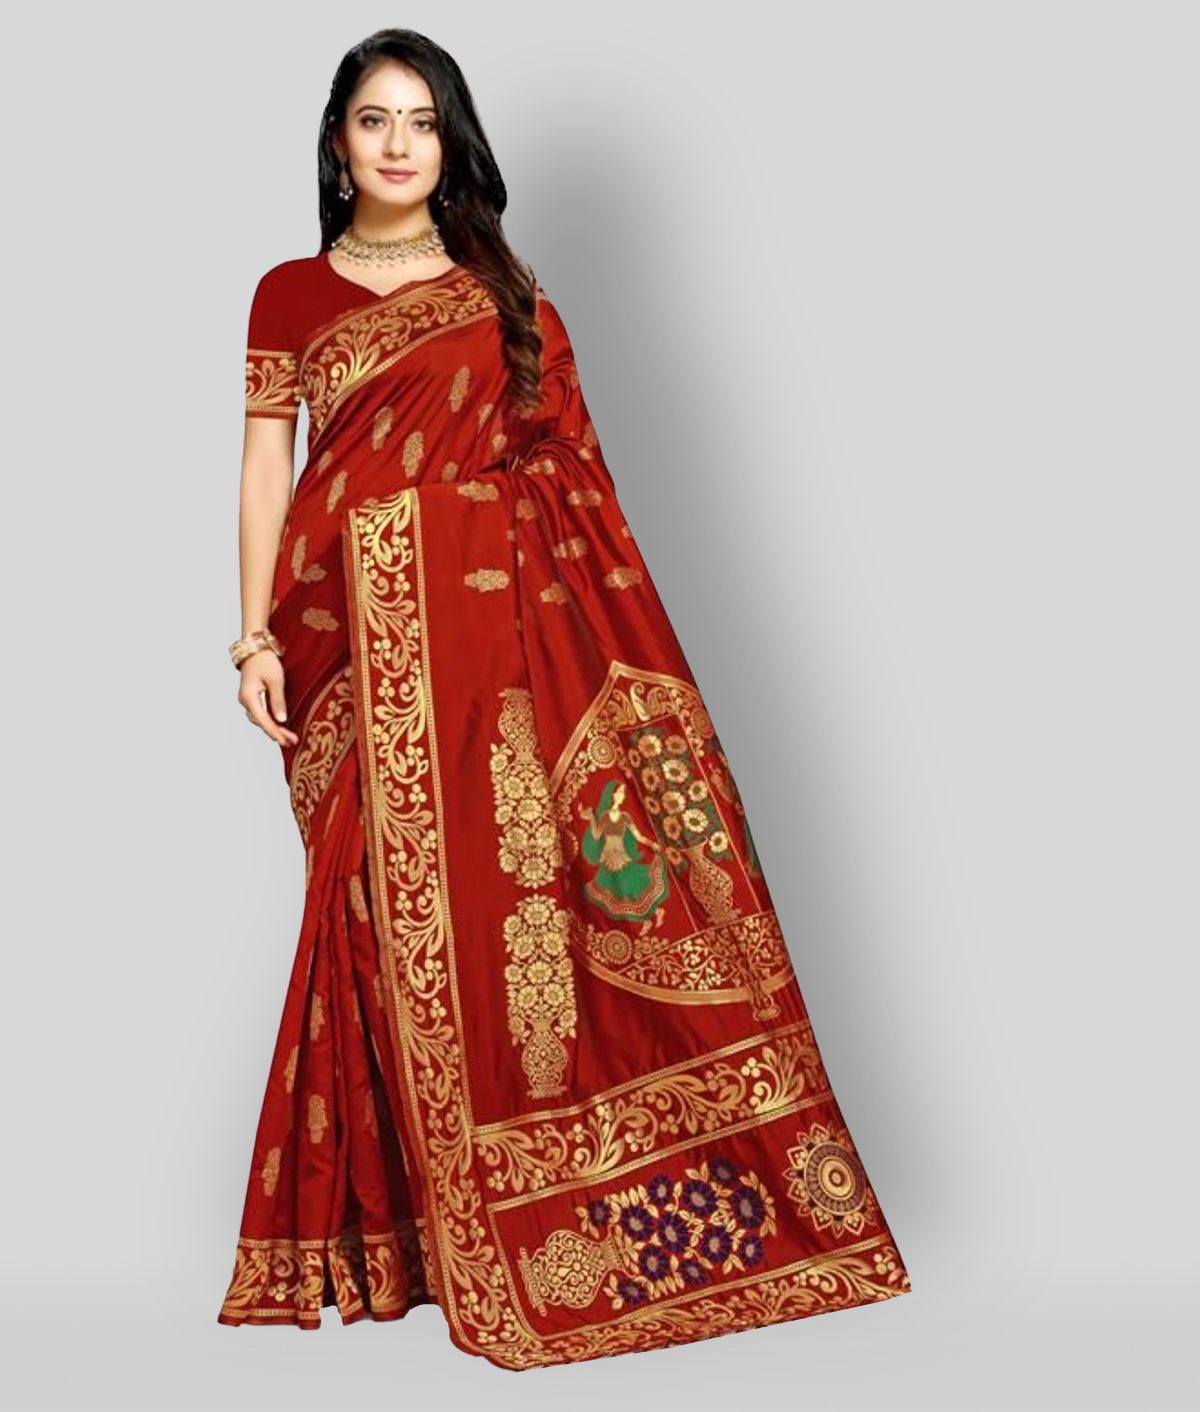 NENCY FASHION - Red Banarasi Silk Saree With Blouse Piece (Pack of 1)